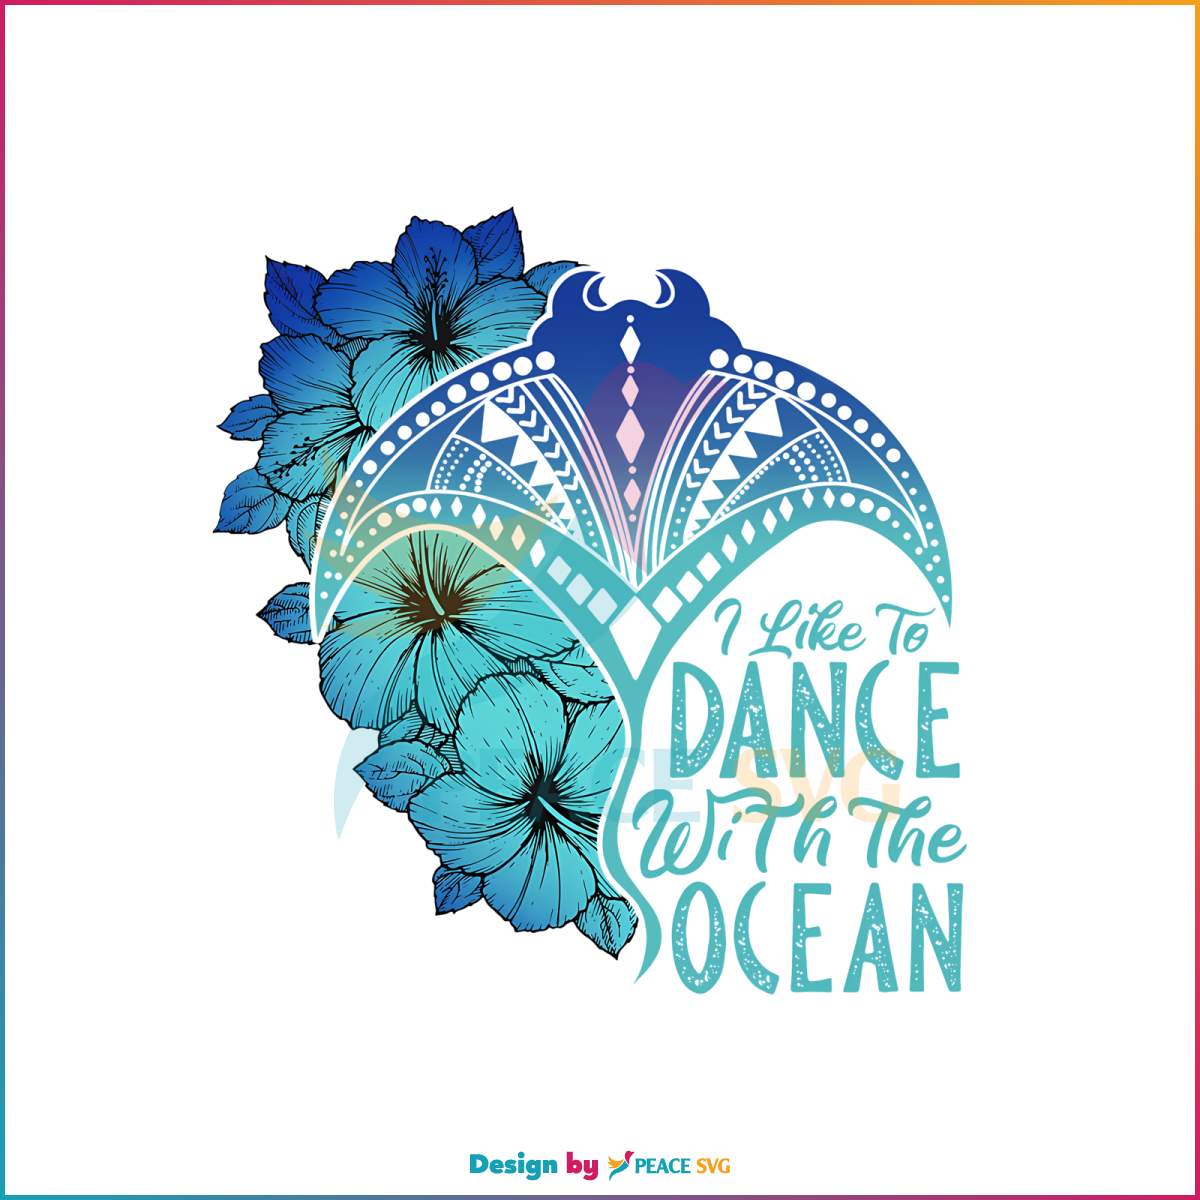 moana-stingray-i-like-to-dance-with-the-ocean-svg-cricut-file